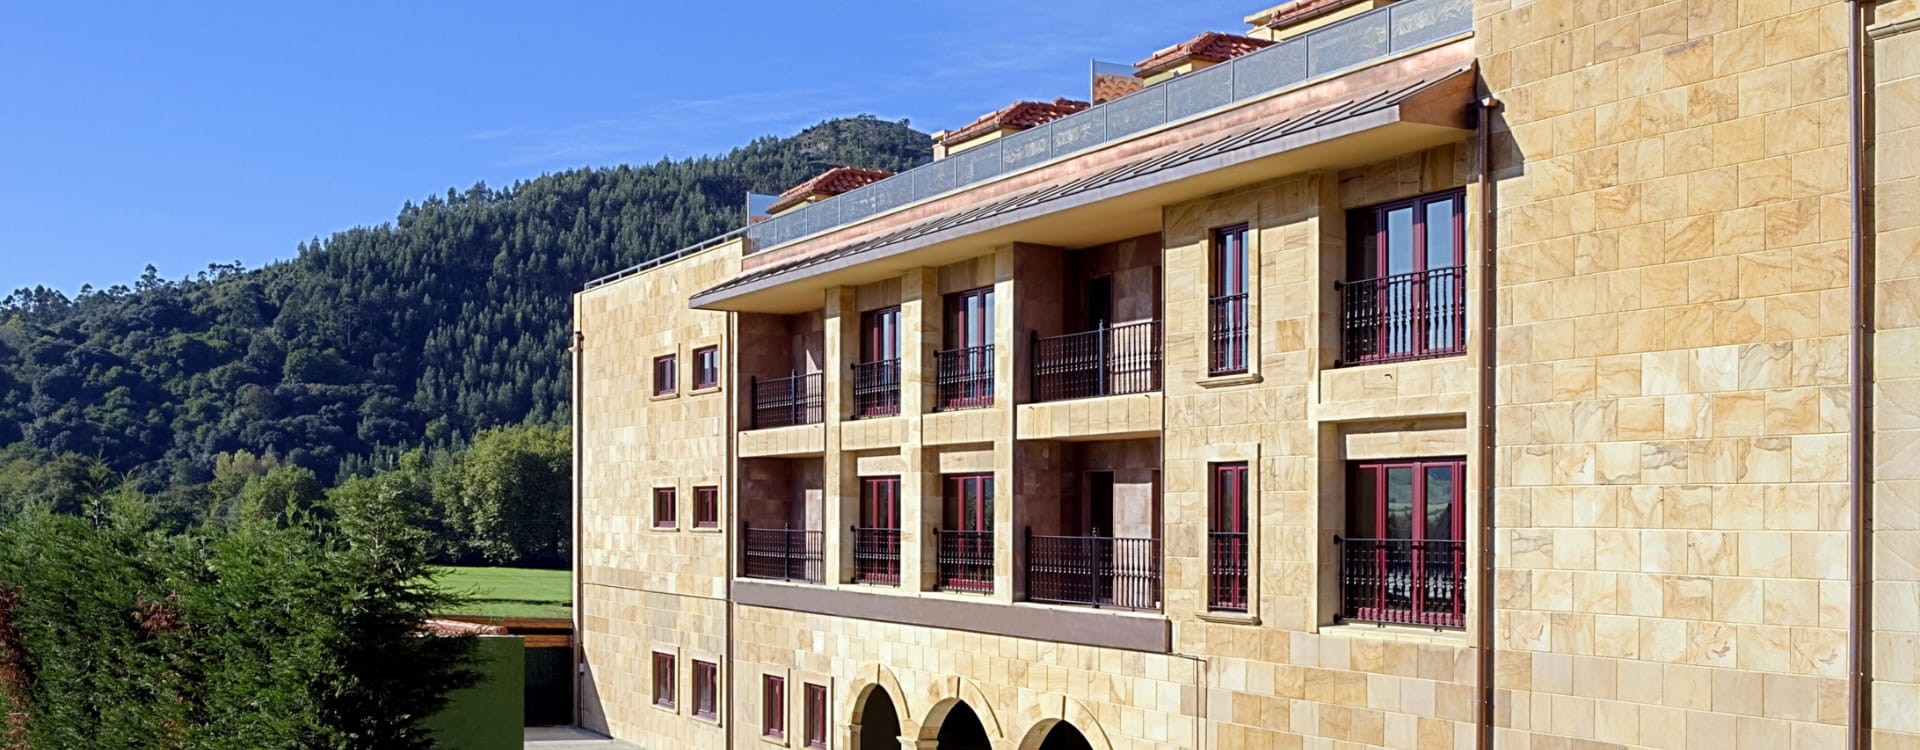 Image of the exterior façade of the villa pasiega spa flats in Hoznayo, Cantabria.